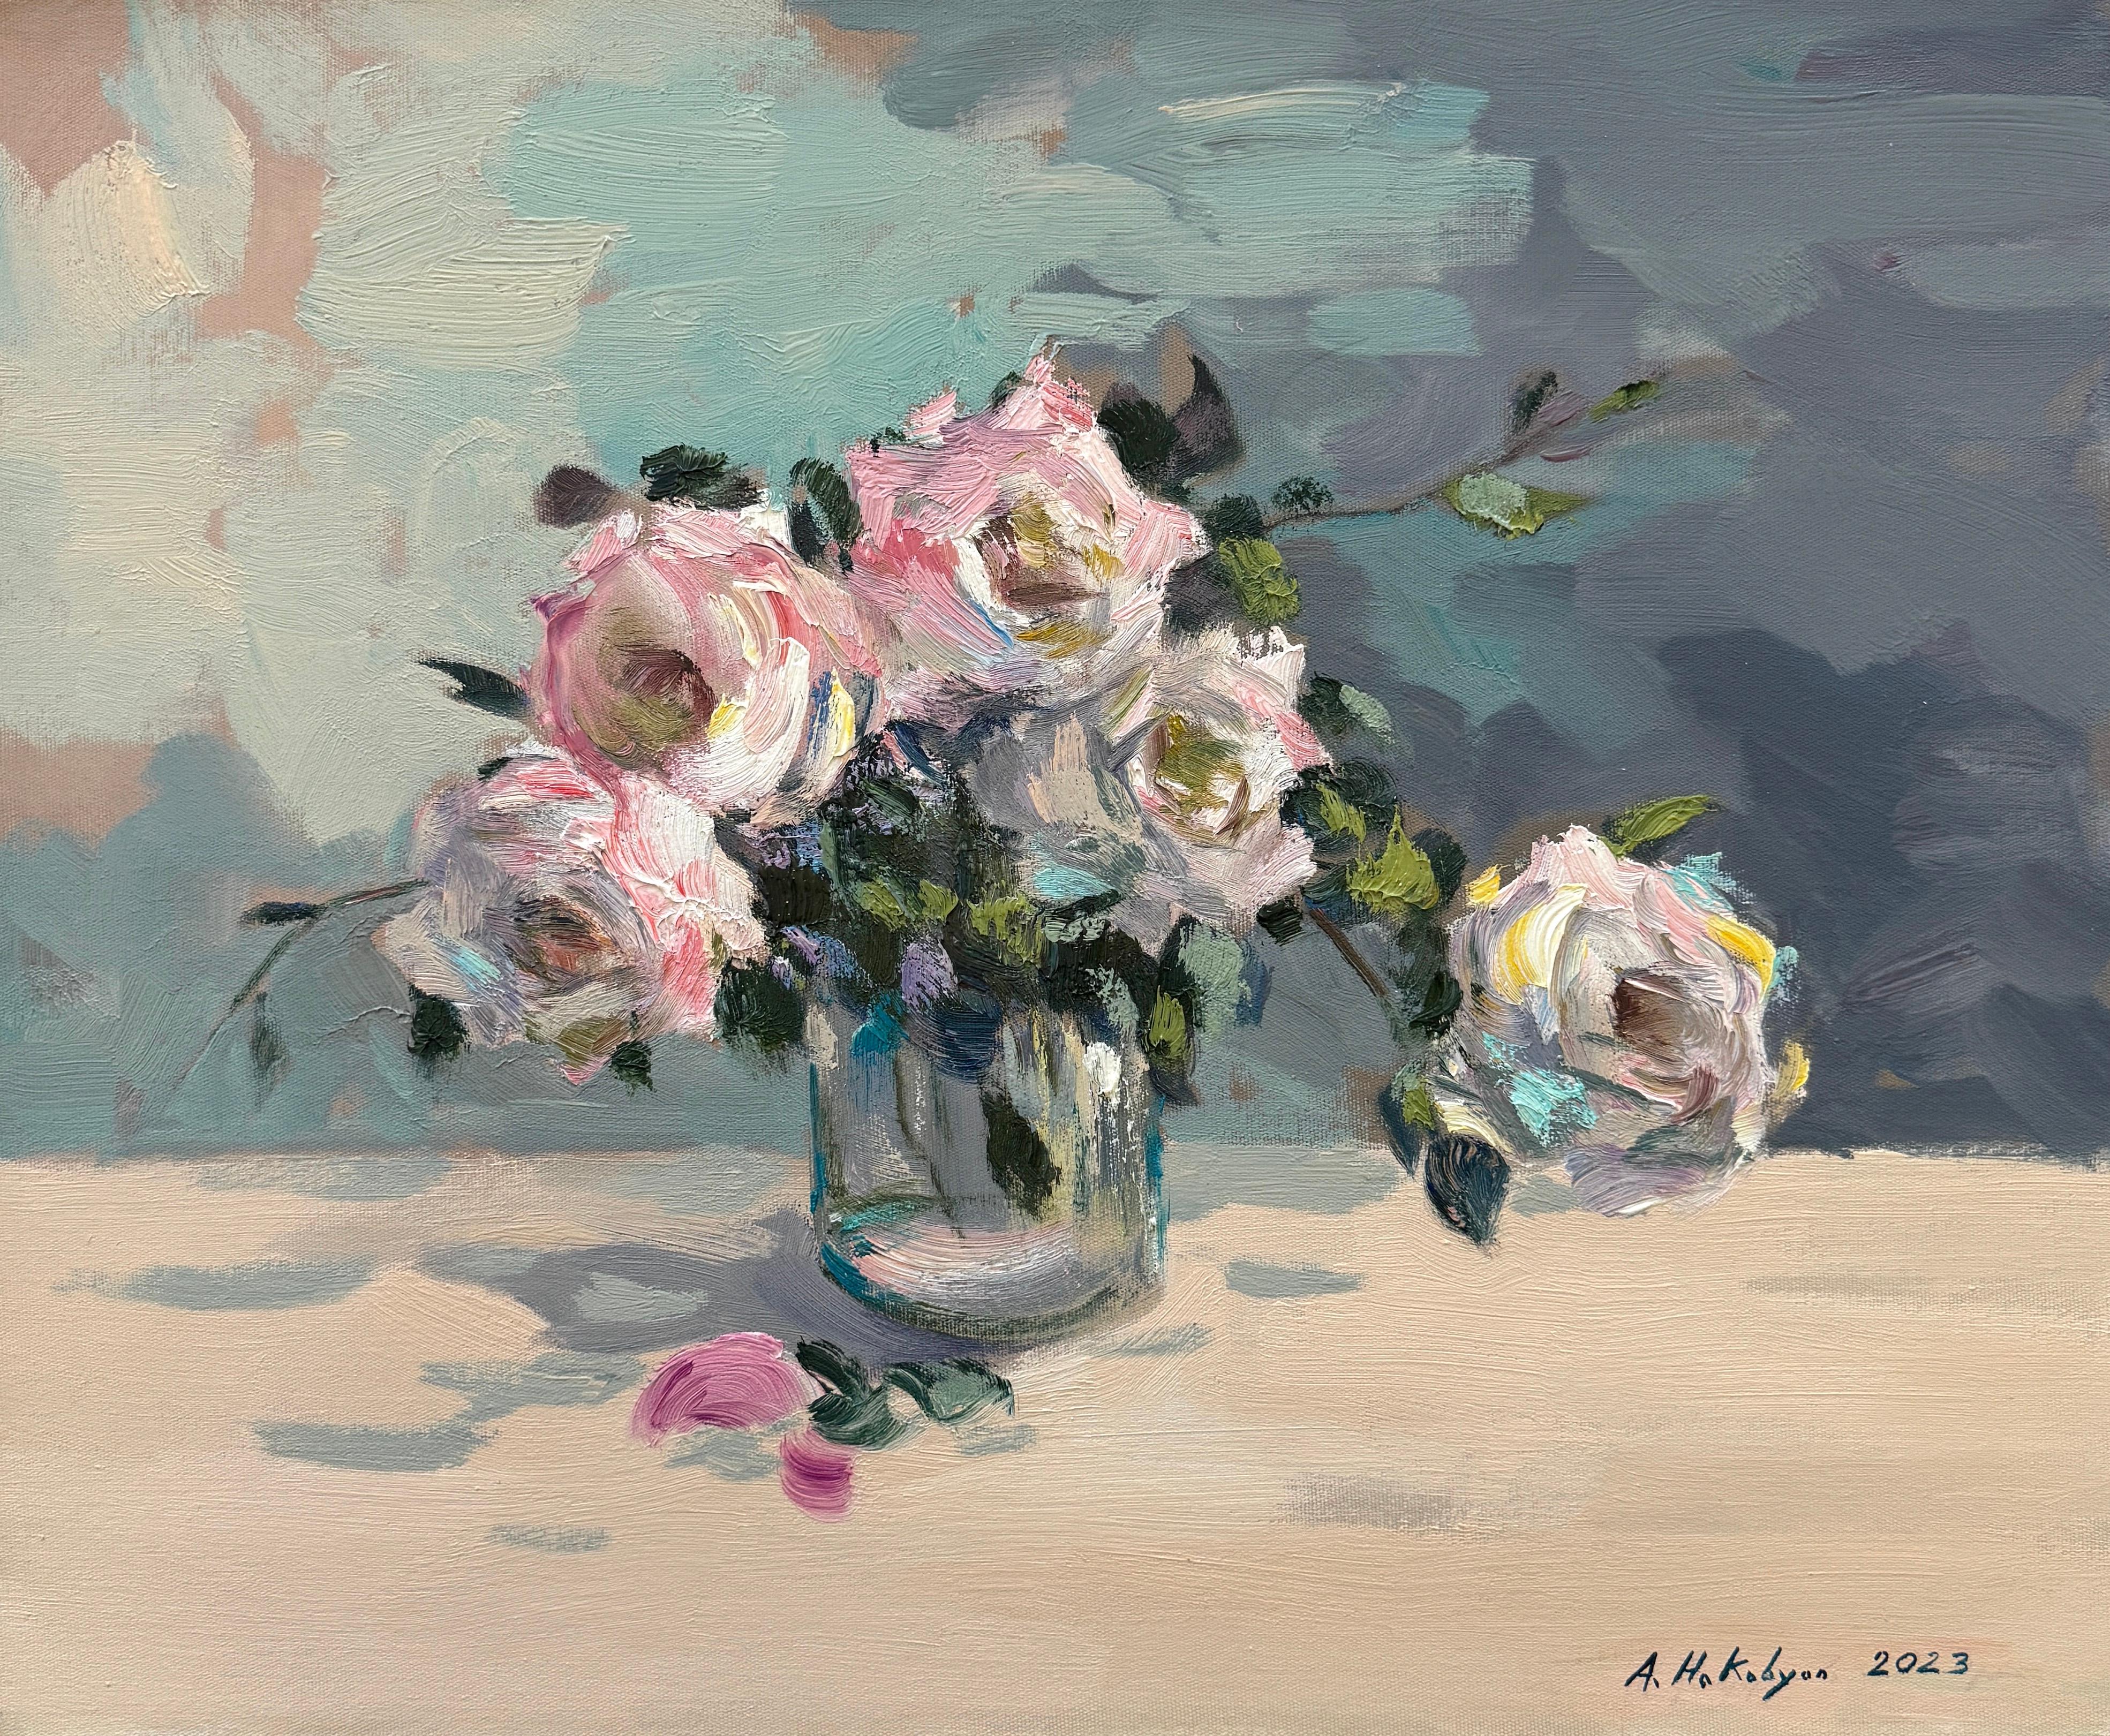 Artist: Ara H. Hakobyan
Work: Original Oil Painting, Handmade Artwork, One of a Kind
Medium: Oil on Canvas
Year: 2023
Style: Impressionism
Title: Roses
Size: 19.5